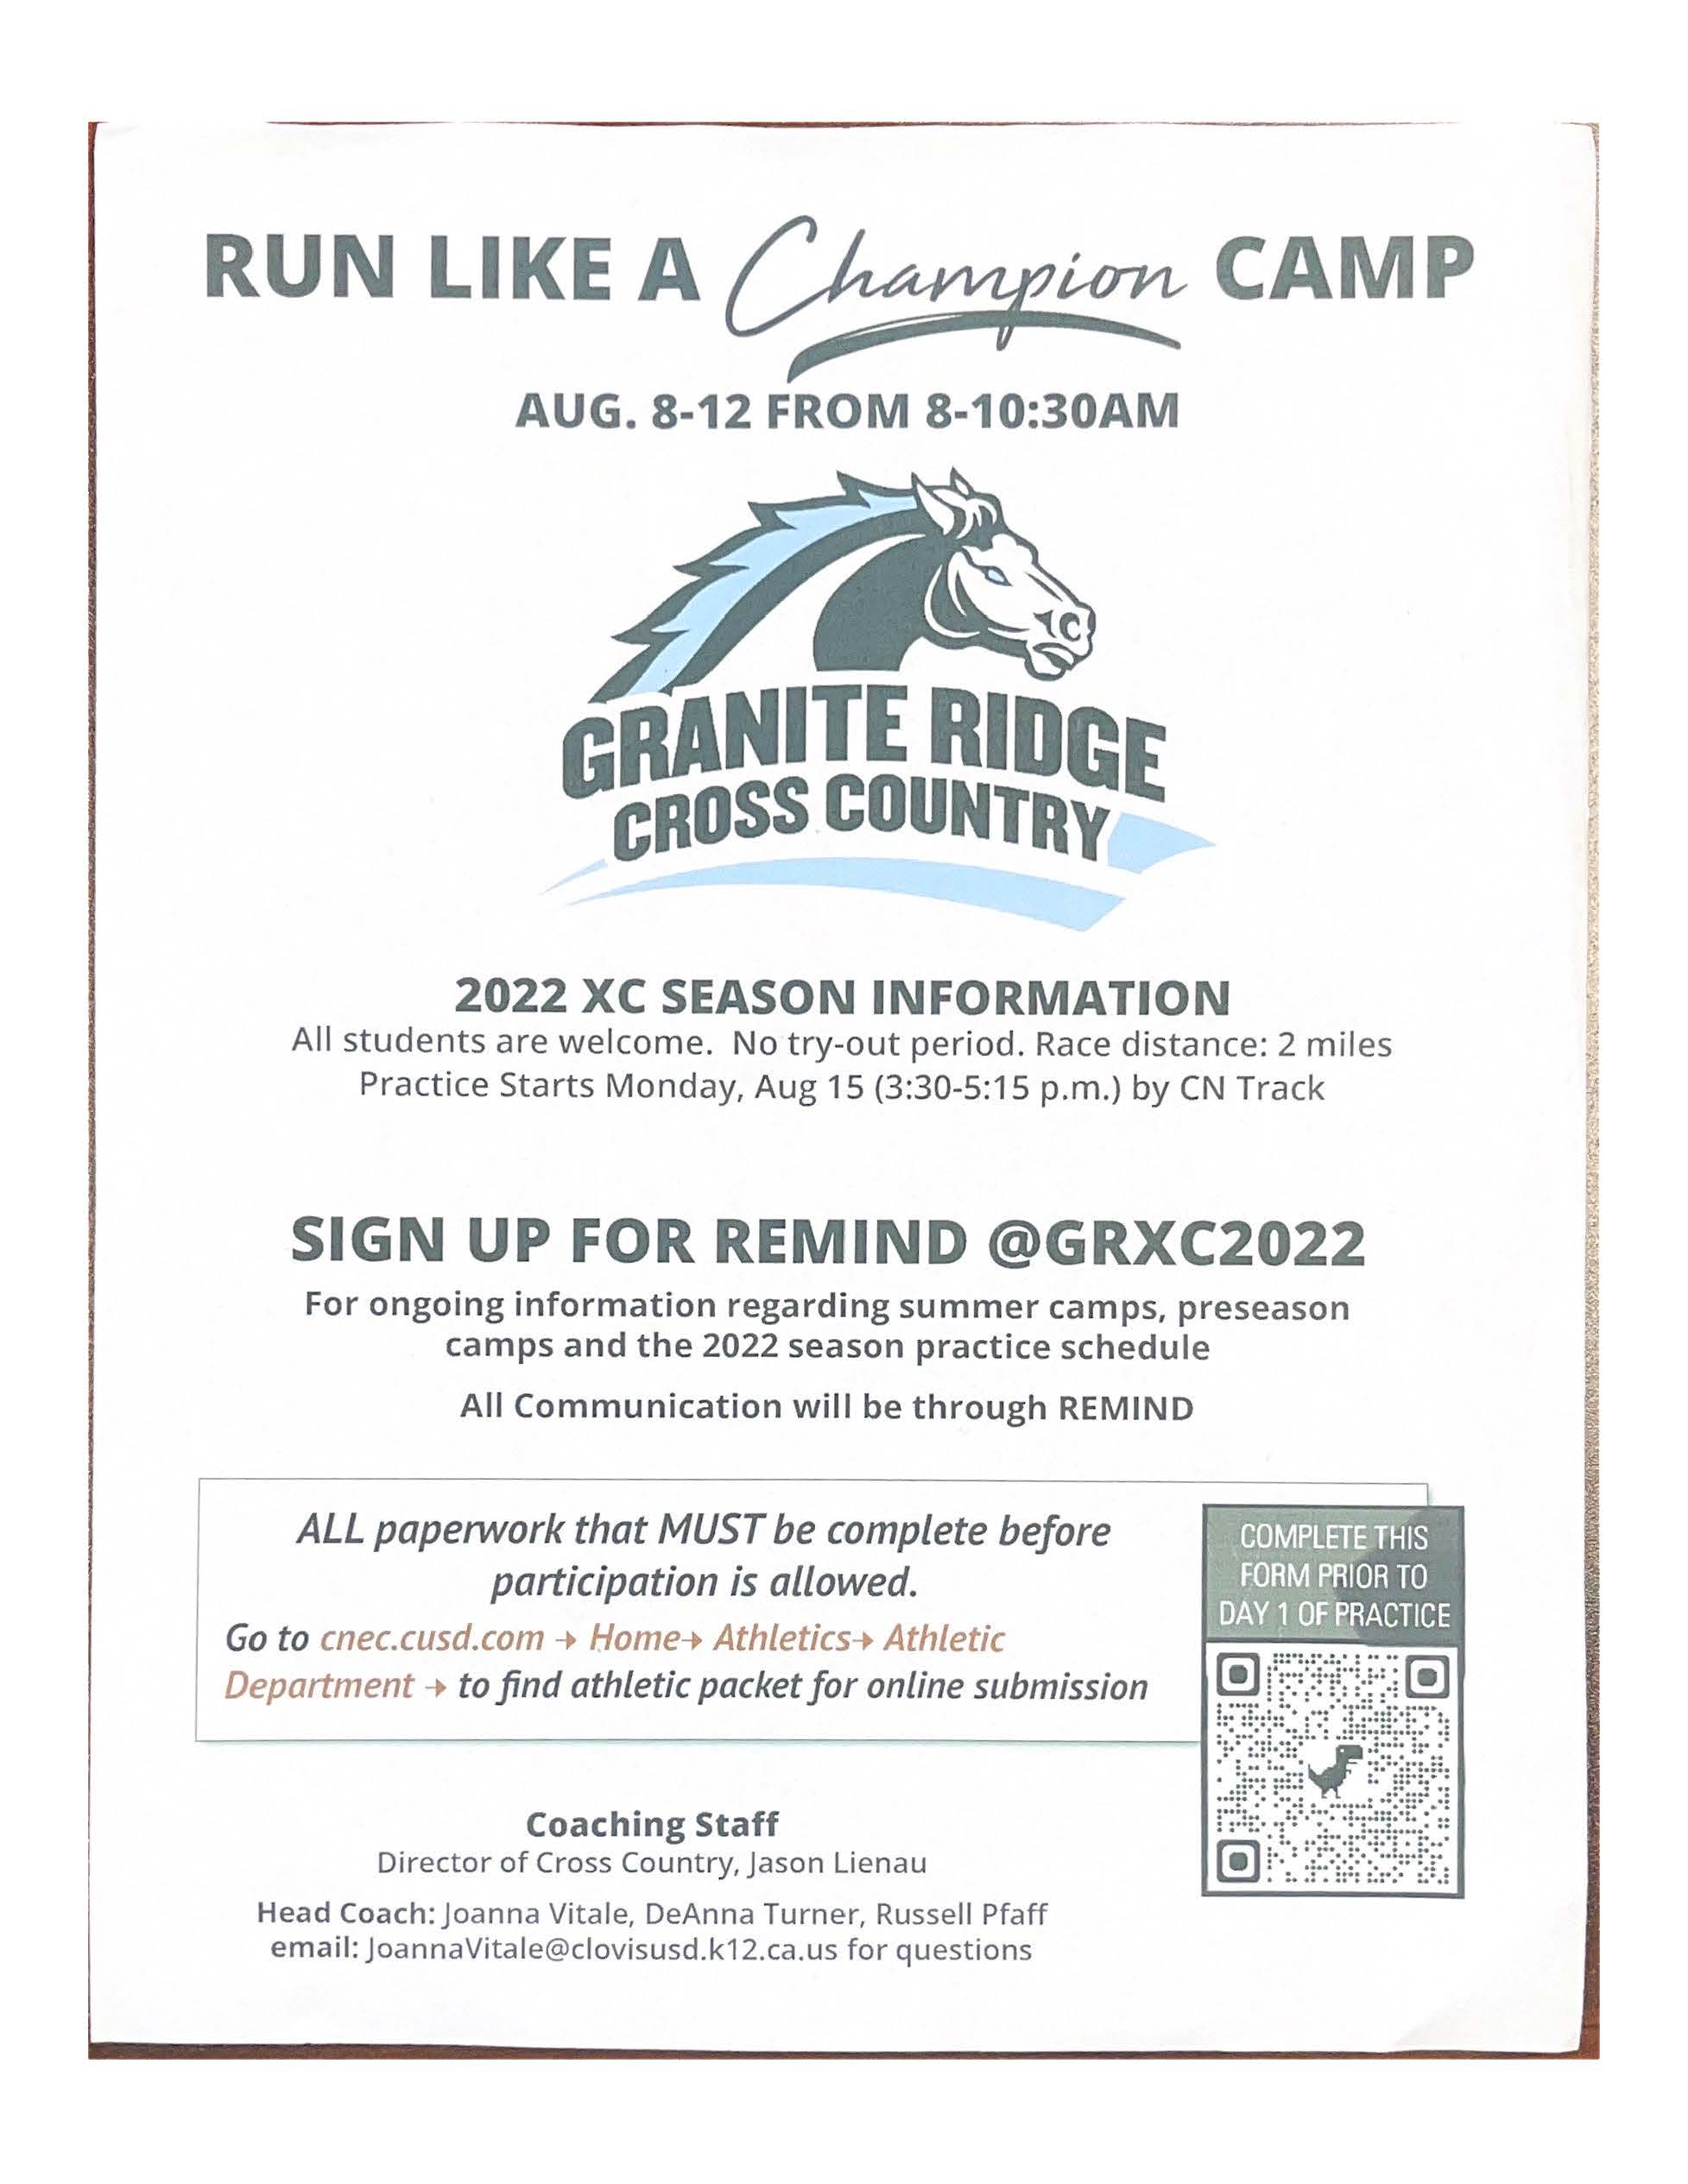 CN Run Like a Champ Camp flier pdf below